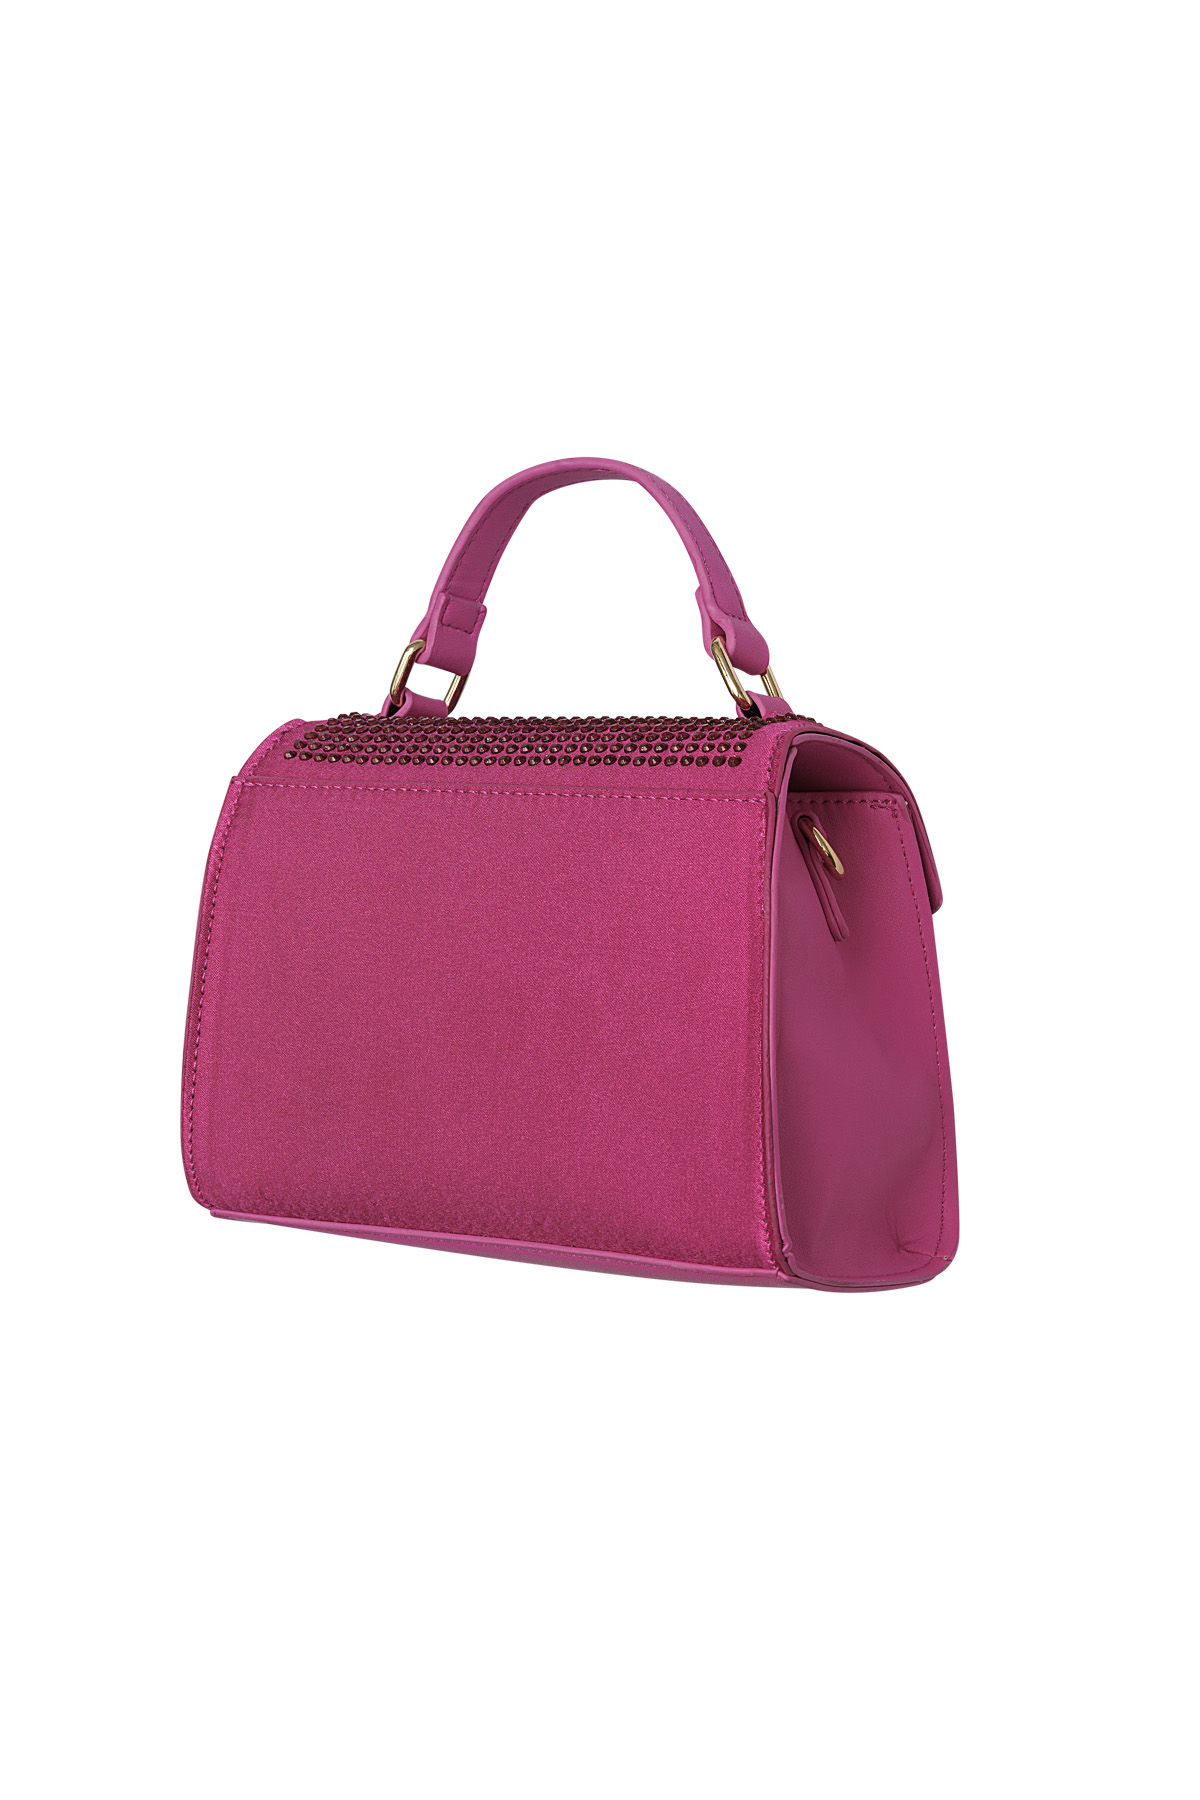 Handbag strass - fuchsia PU h5 Picture6